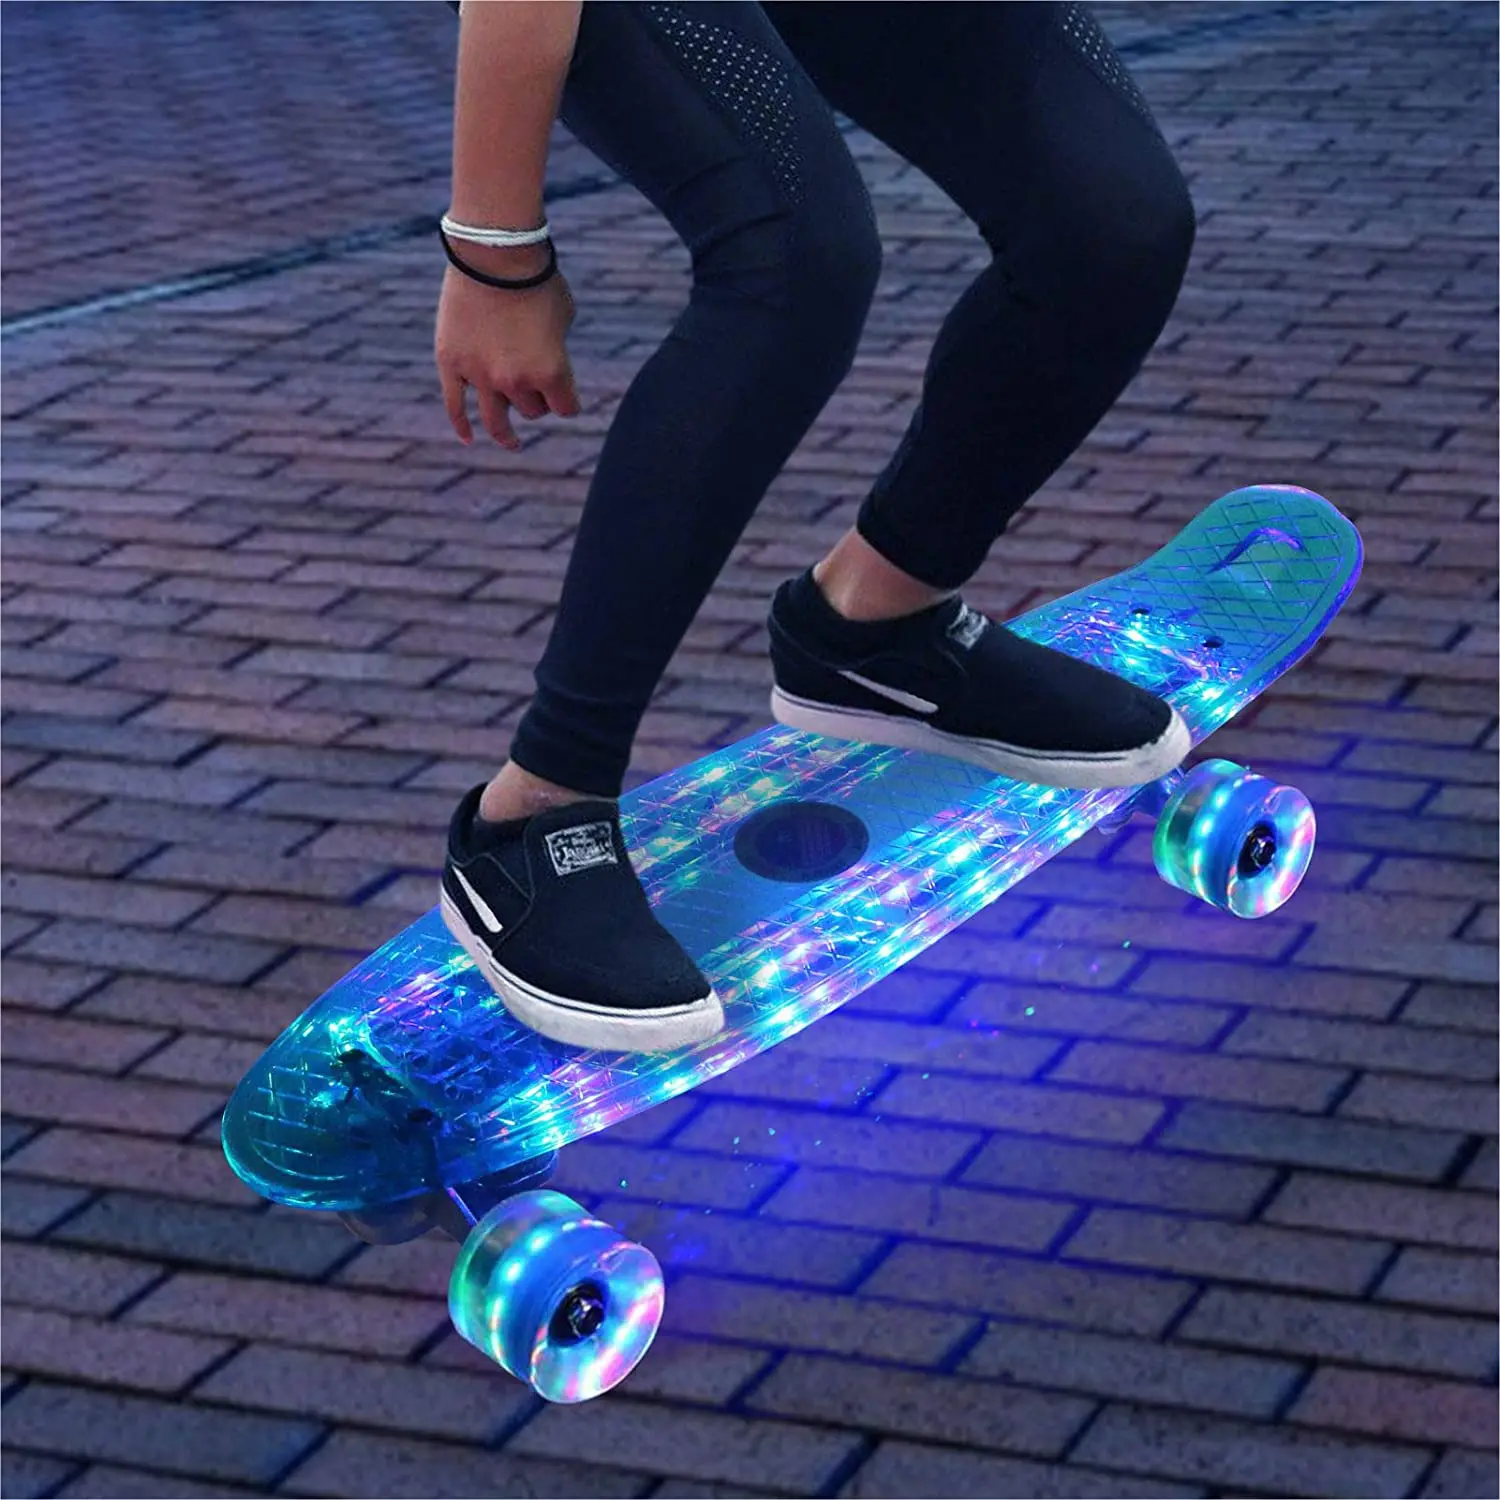 

22-inch cruiser fish board 4 LED light PU wheels mini skateboard beginner board non-slip suitable for teenagers and children